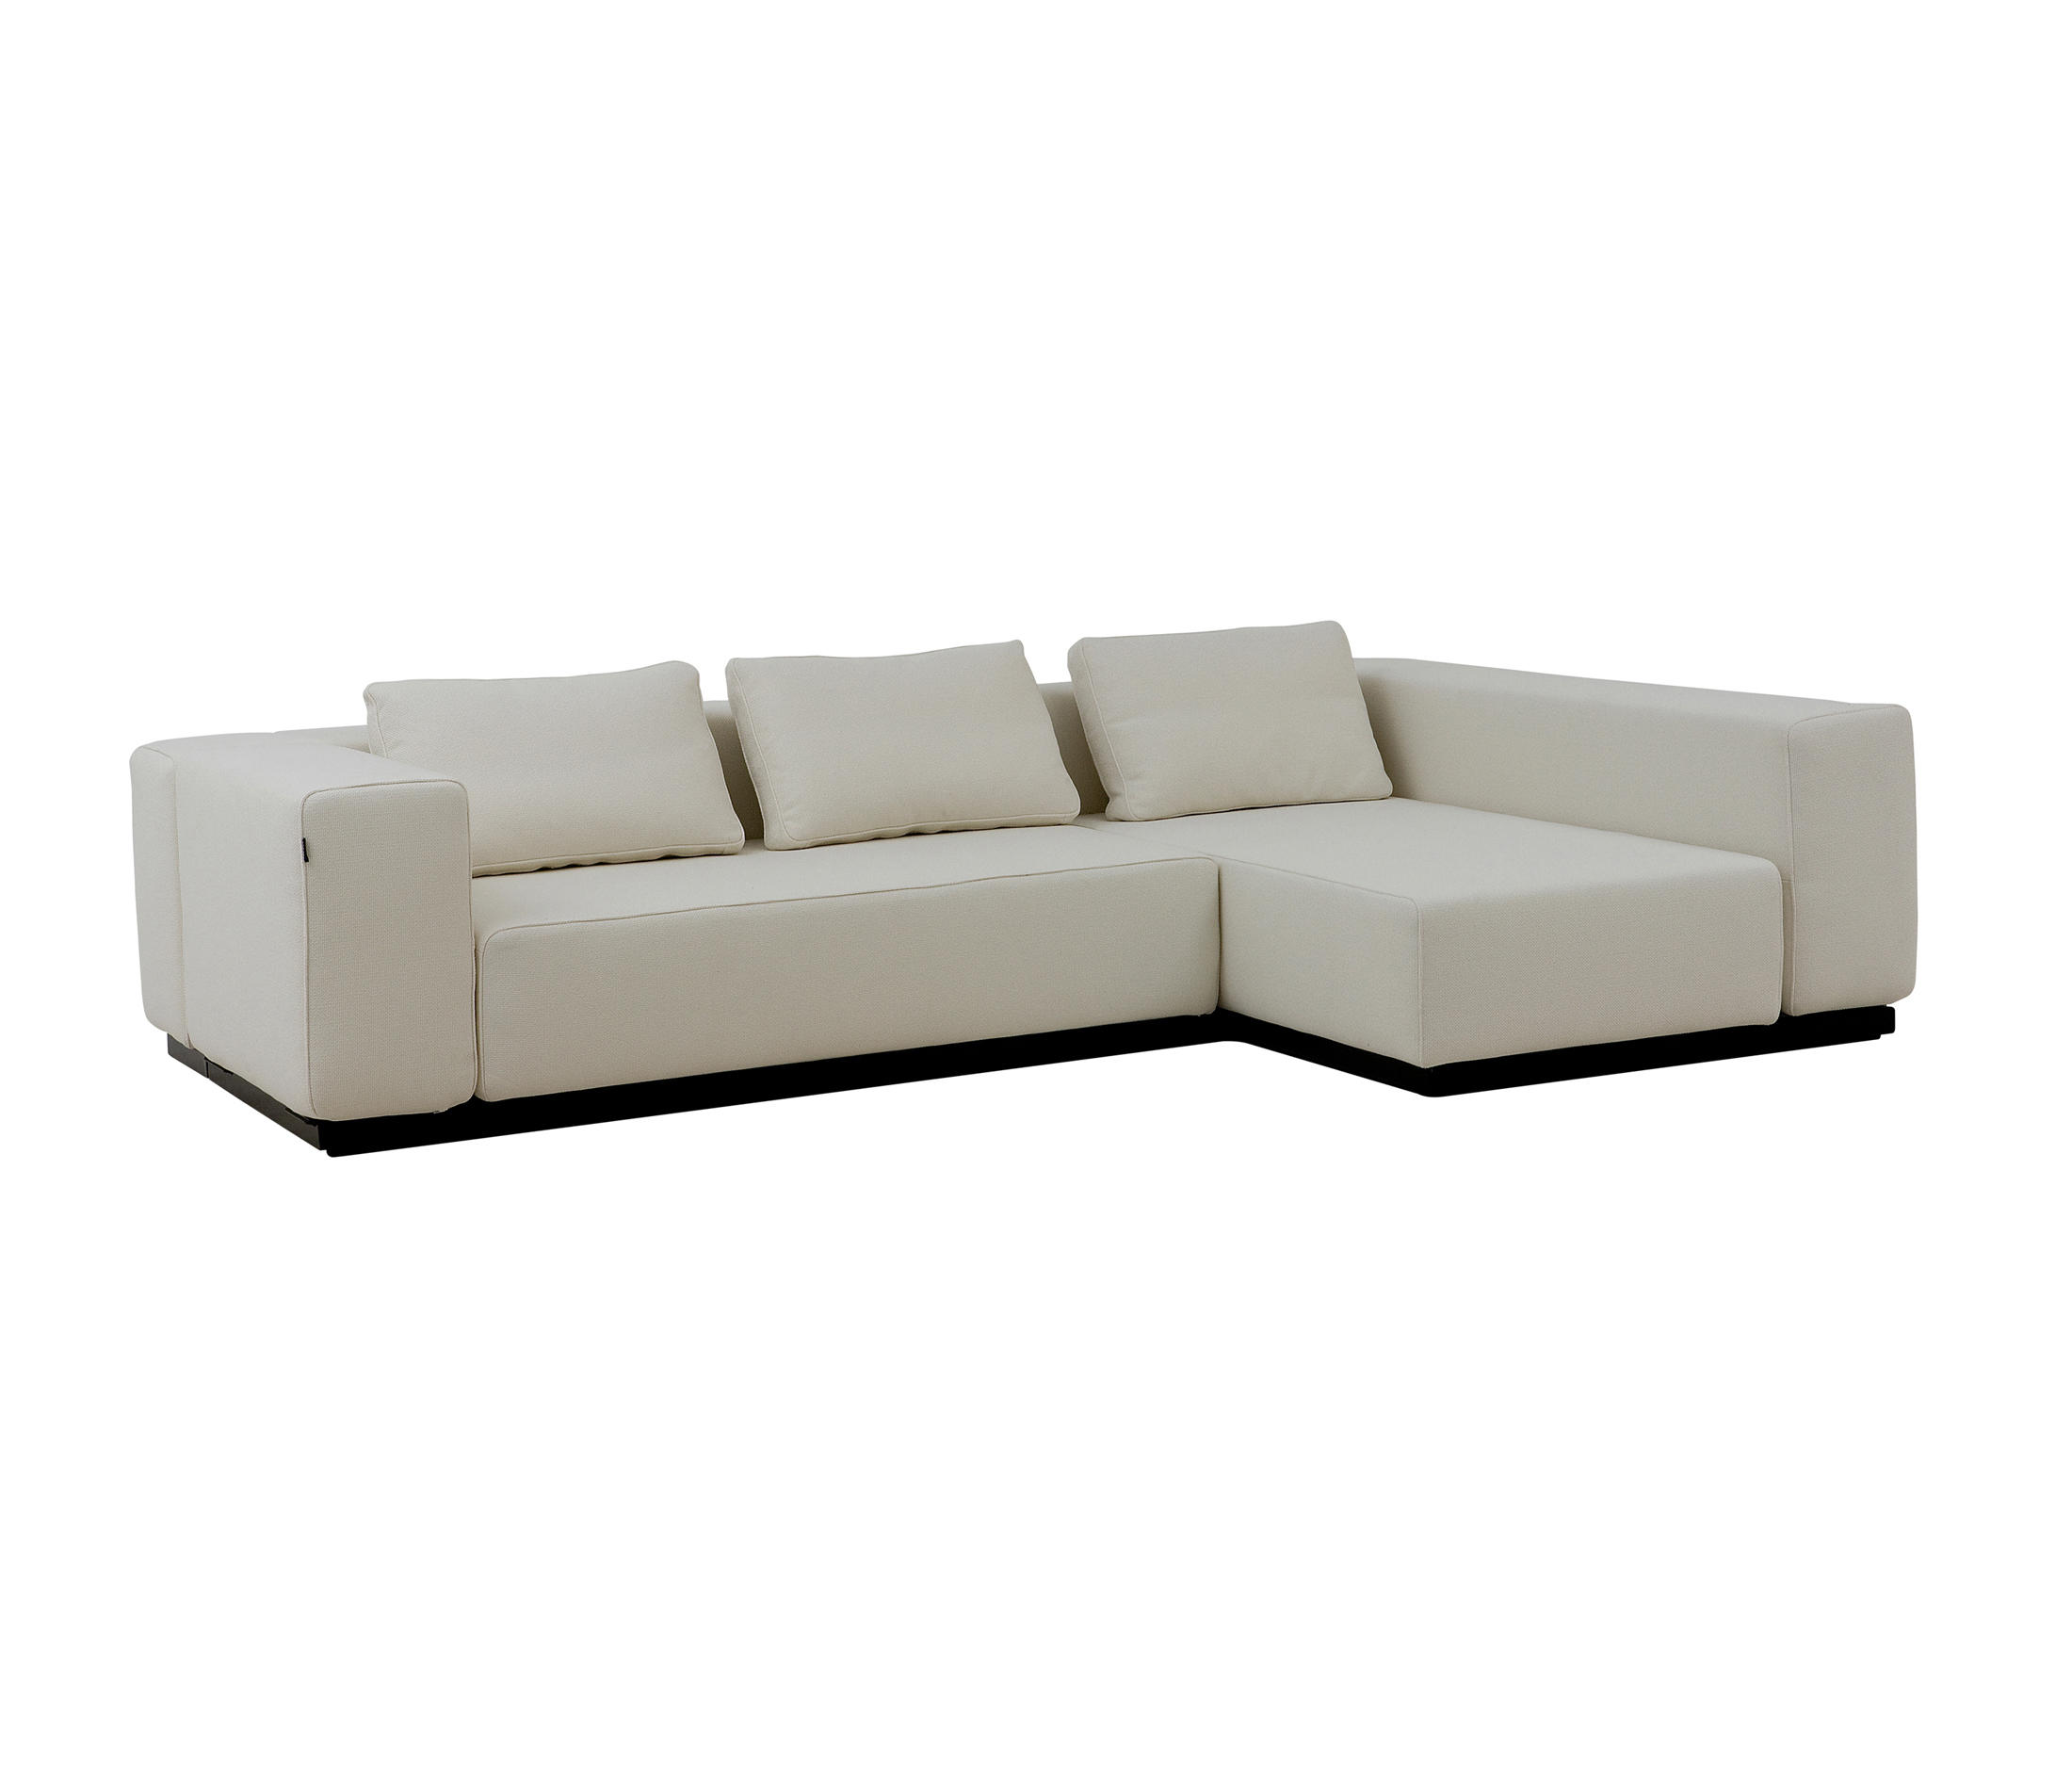 NEVADA SOFA Modular sofa systems from Softline A S